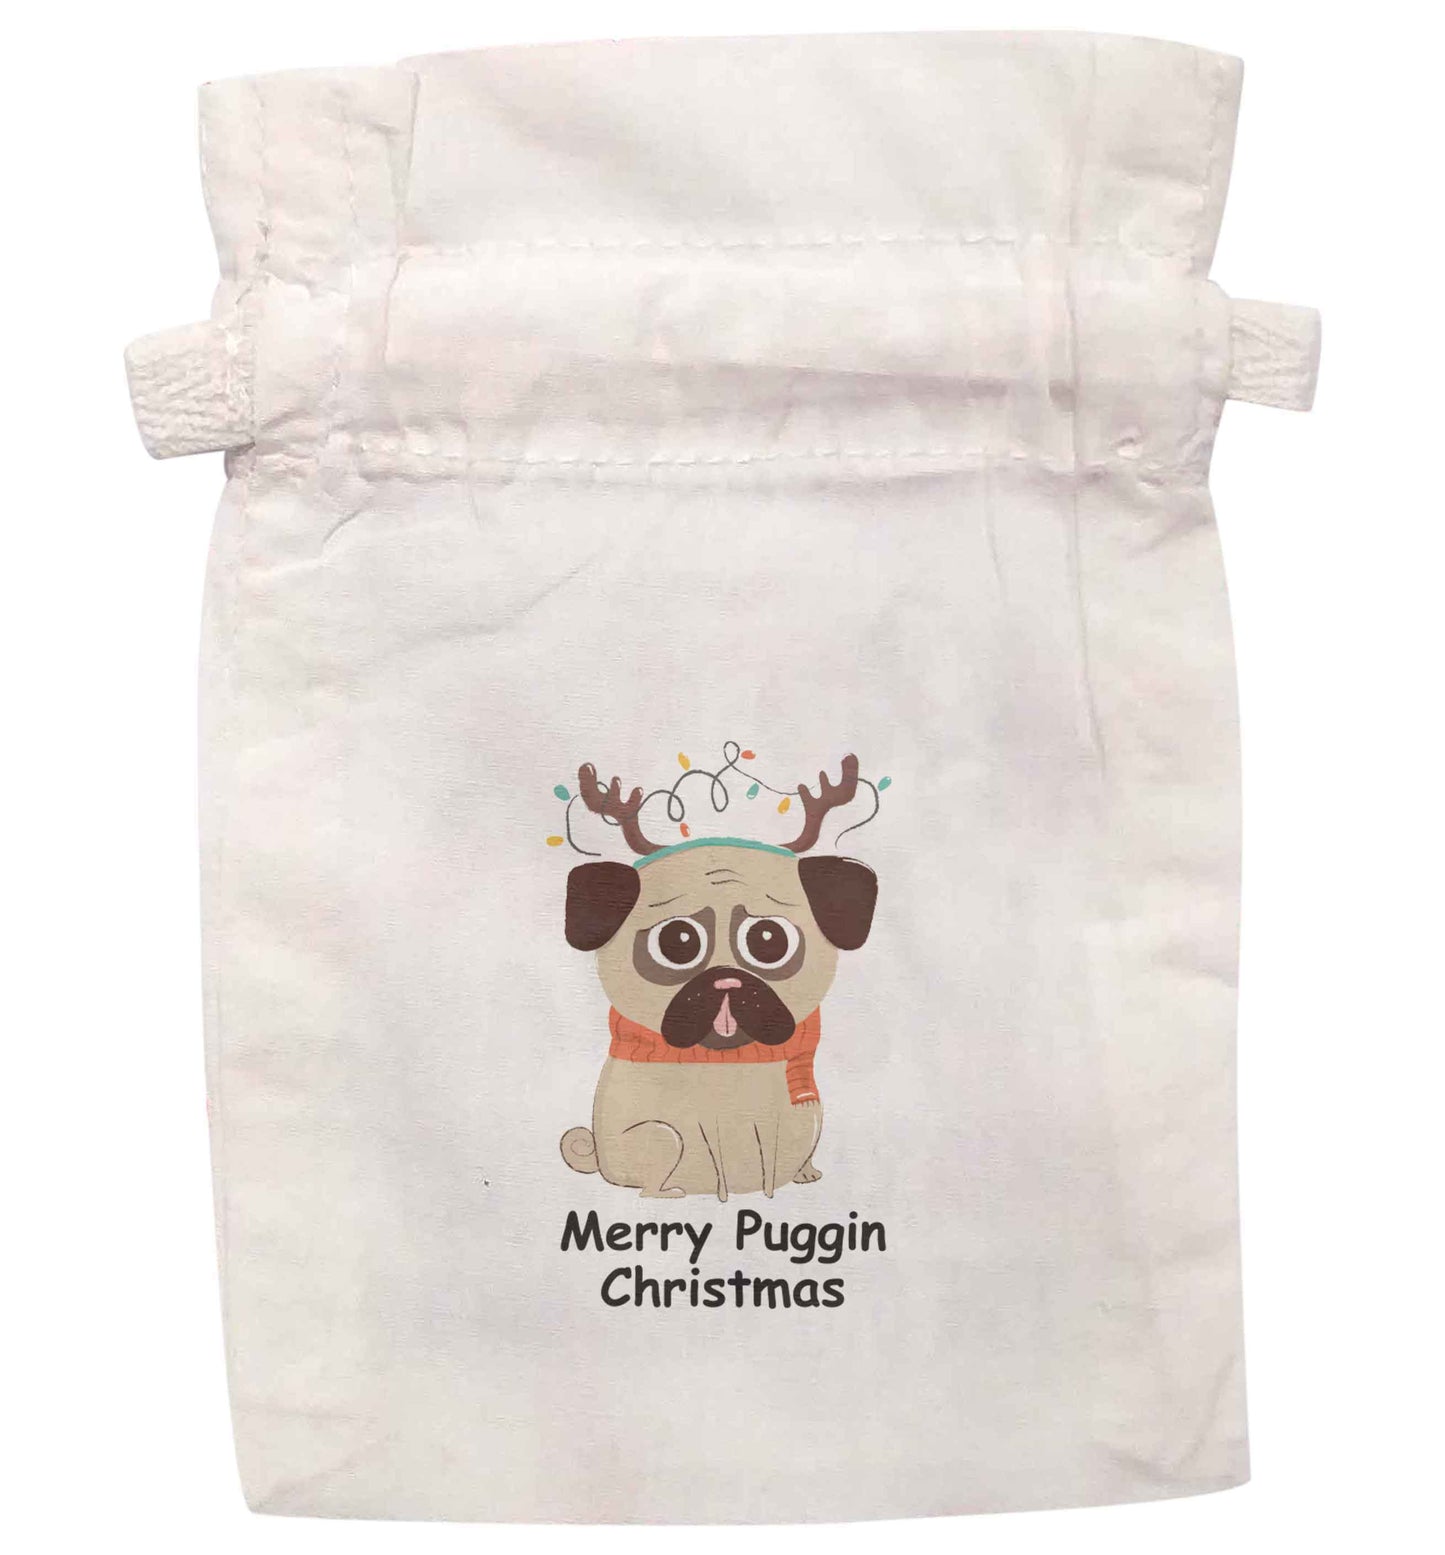 Merry puggin' Chirstmas | XS - L | Pouch / Drawstring bag / Sack | Organic Cotton | Bulk discounts available!